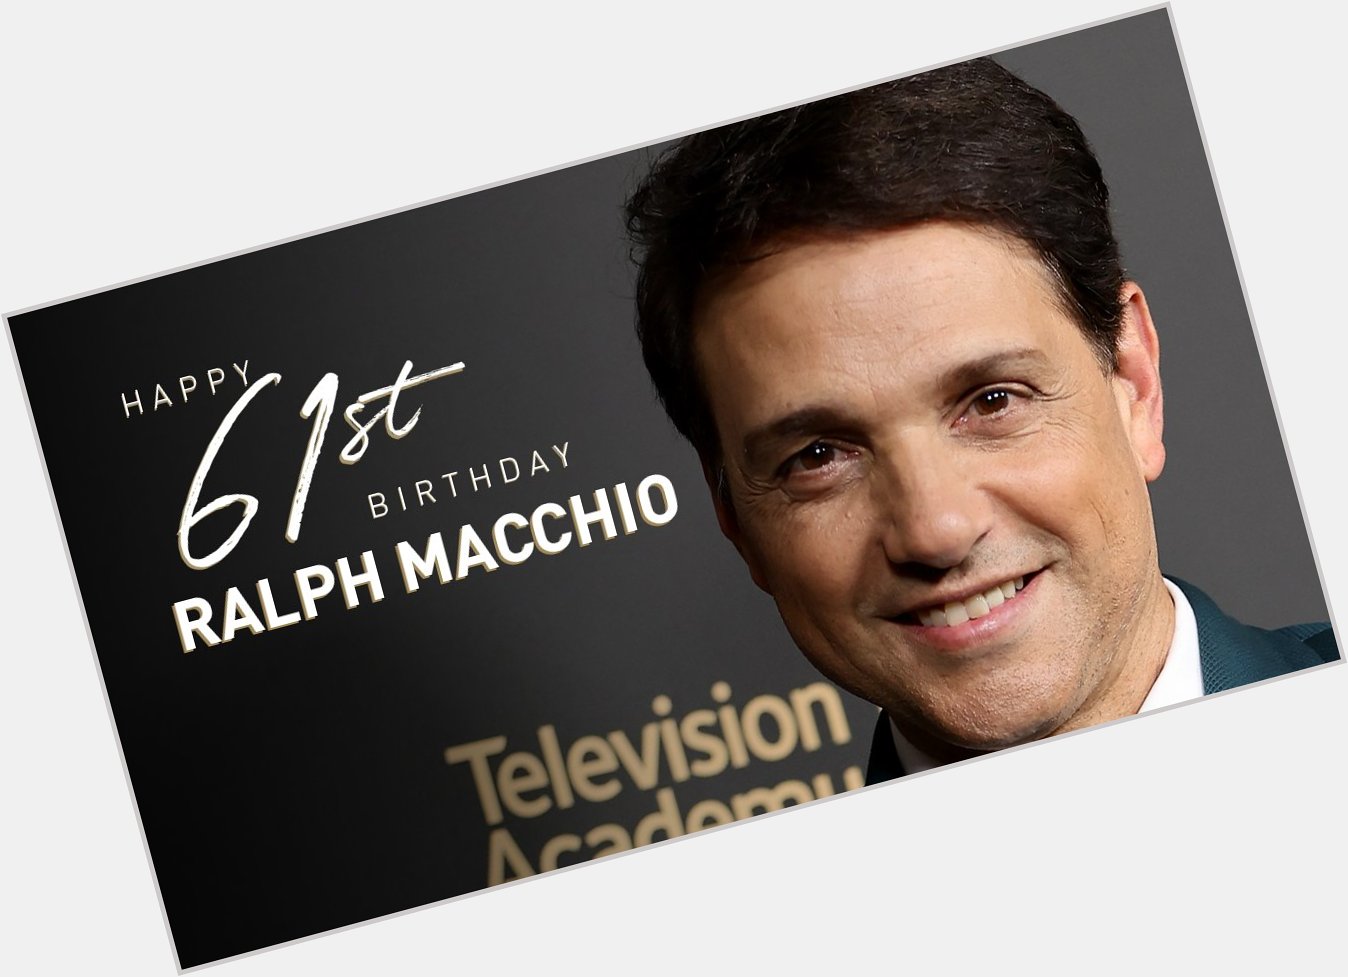 Happy 61st birthday to the legendary Actor Ralph Macchio! 